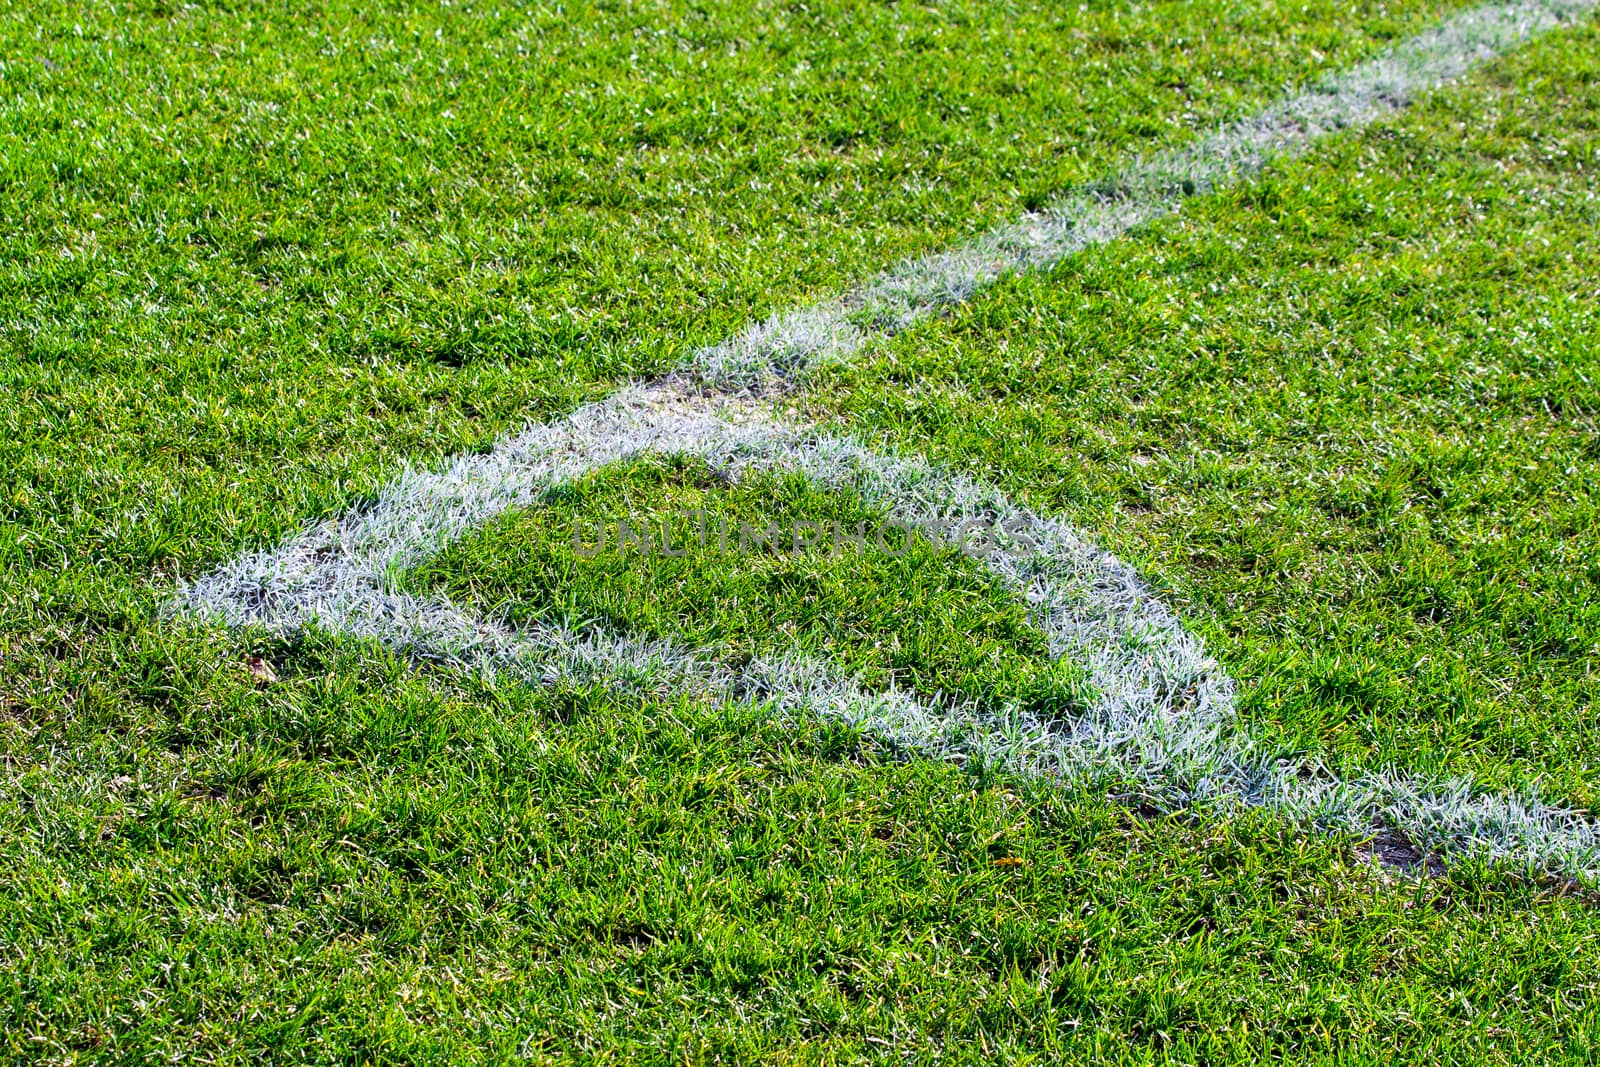 corner point on the football field soccer by Havana